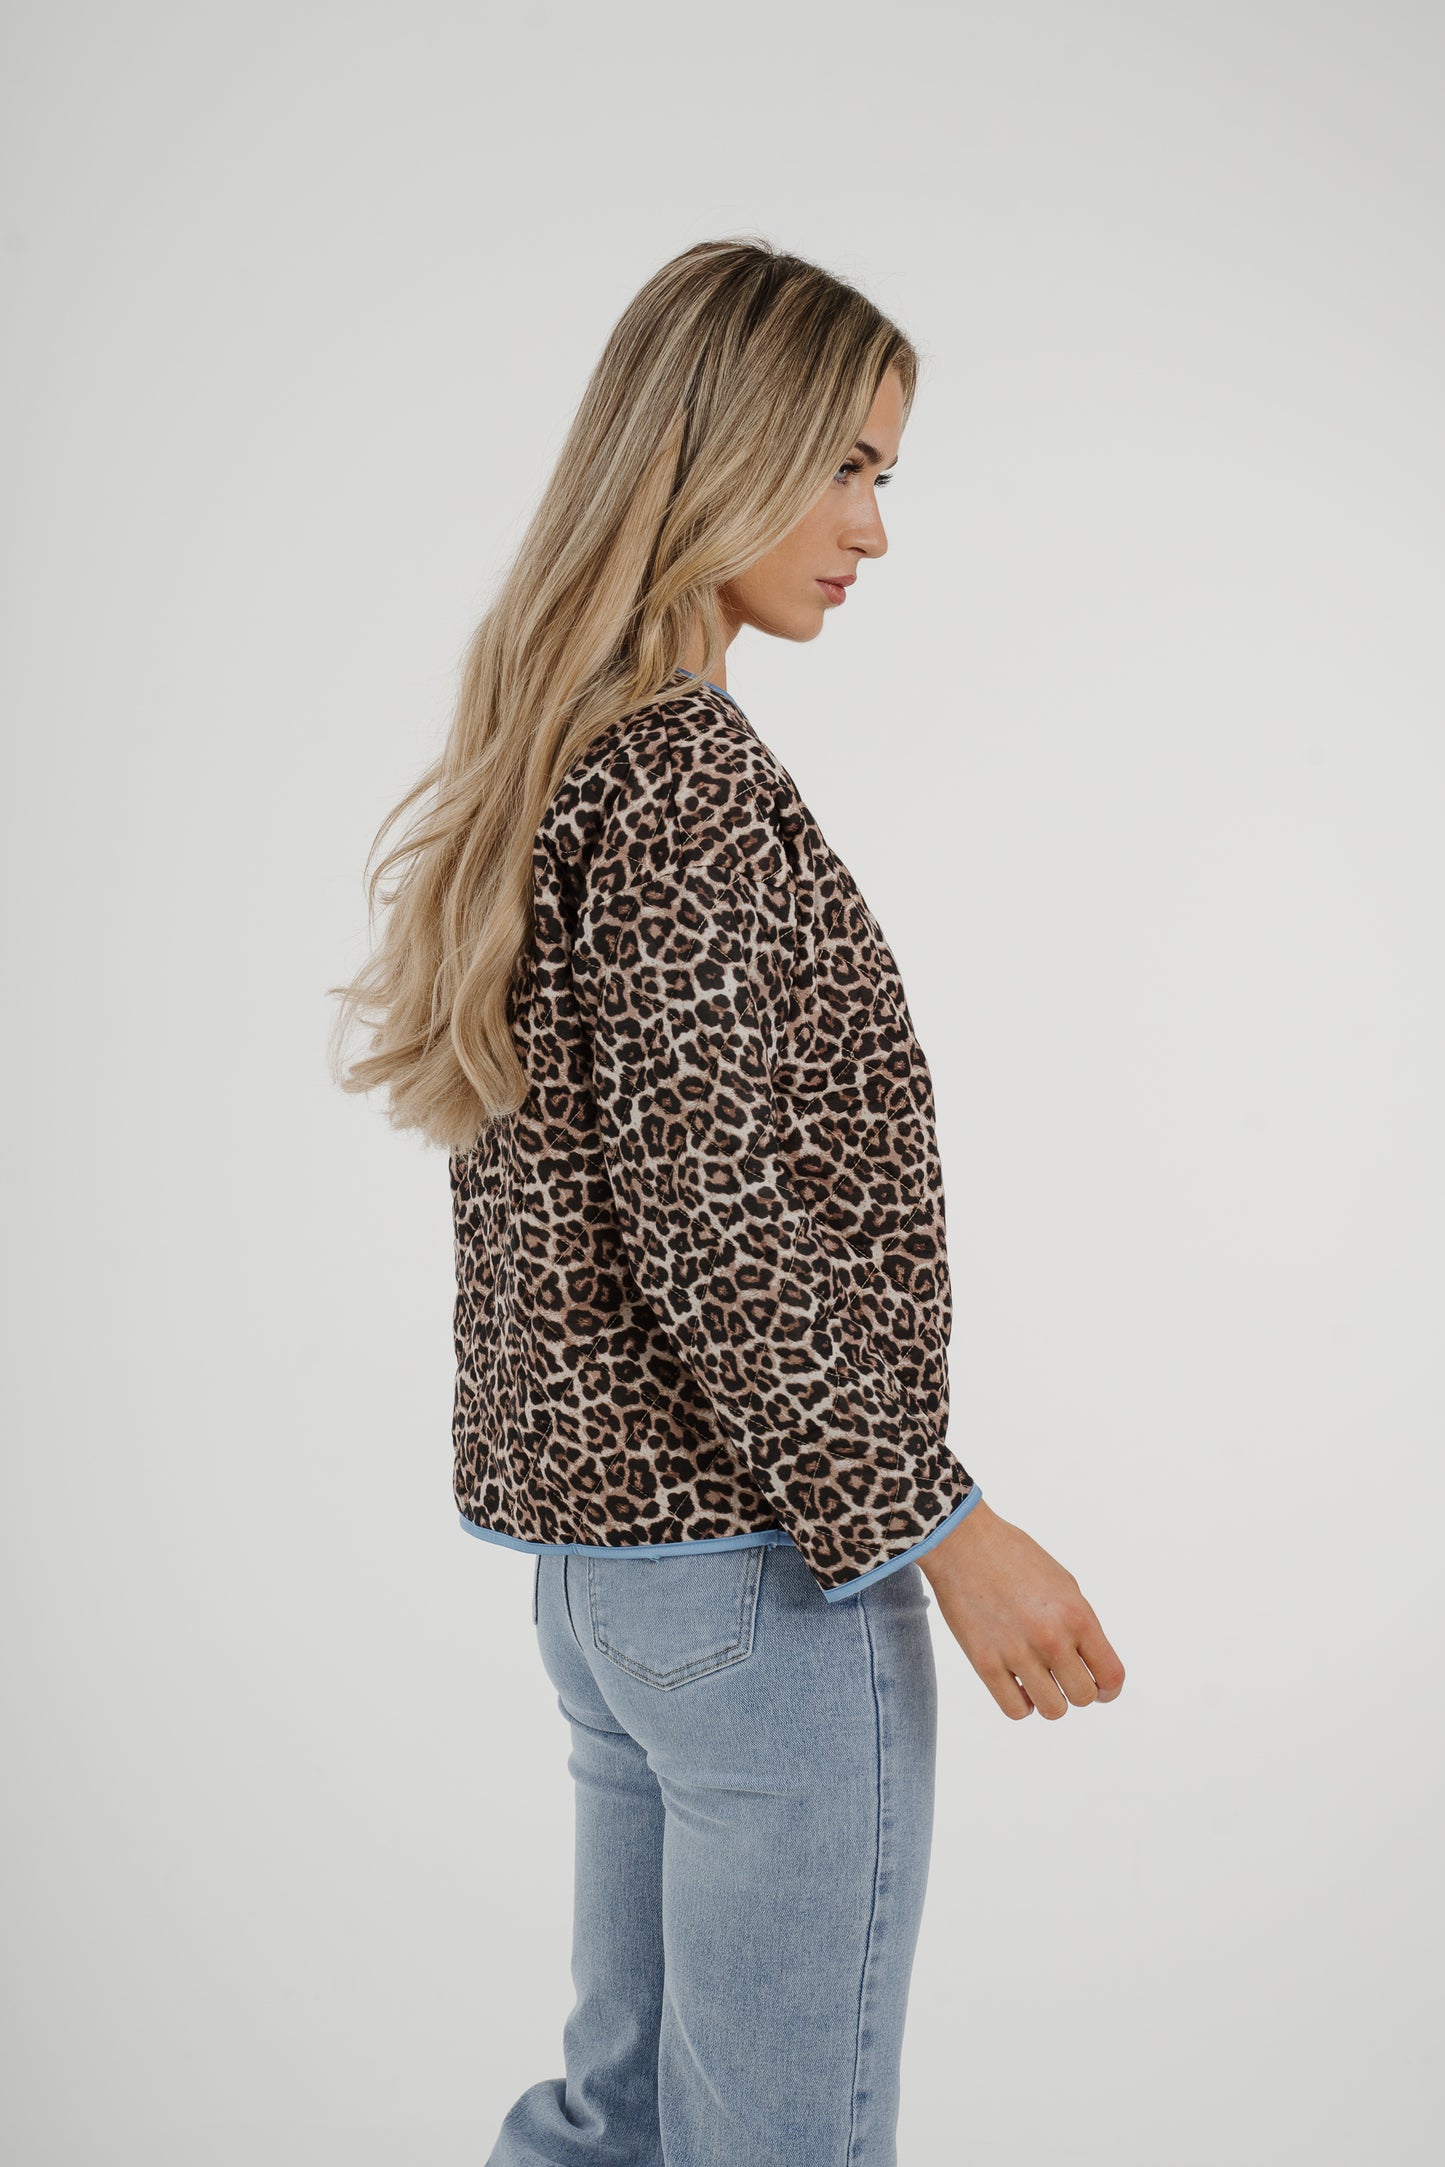 Lynne Blue Trim Quilted Jacket In Leopard Print